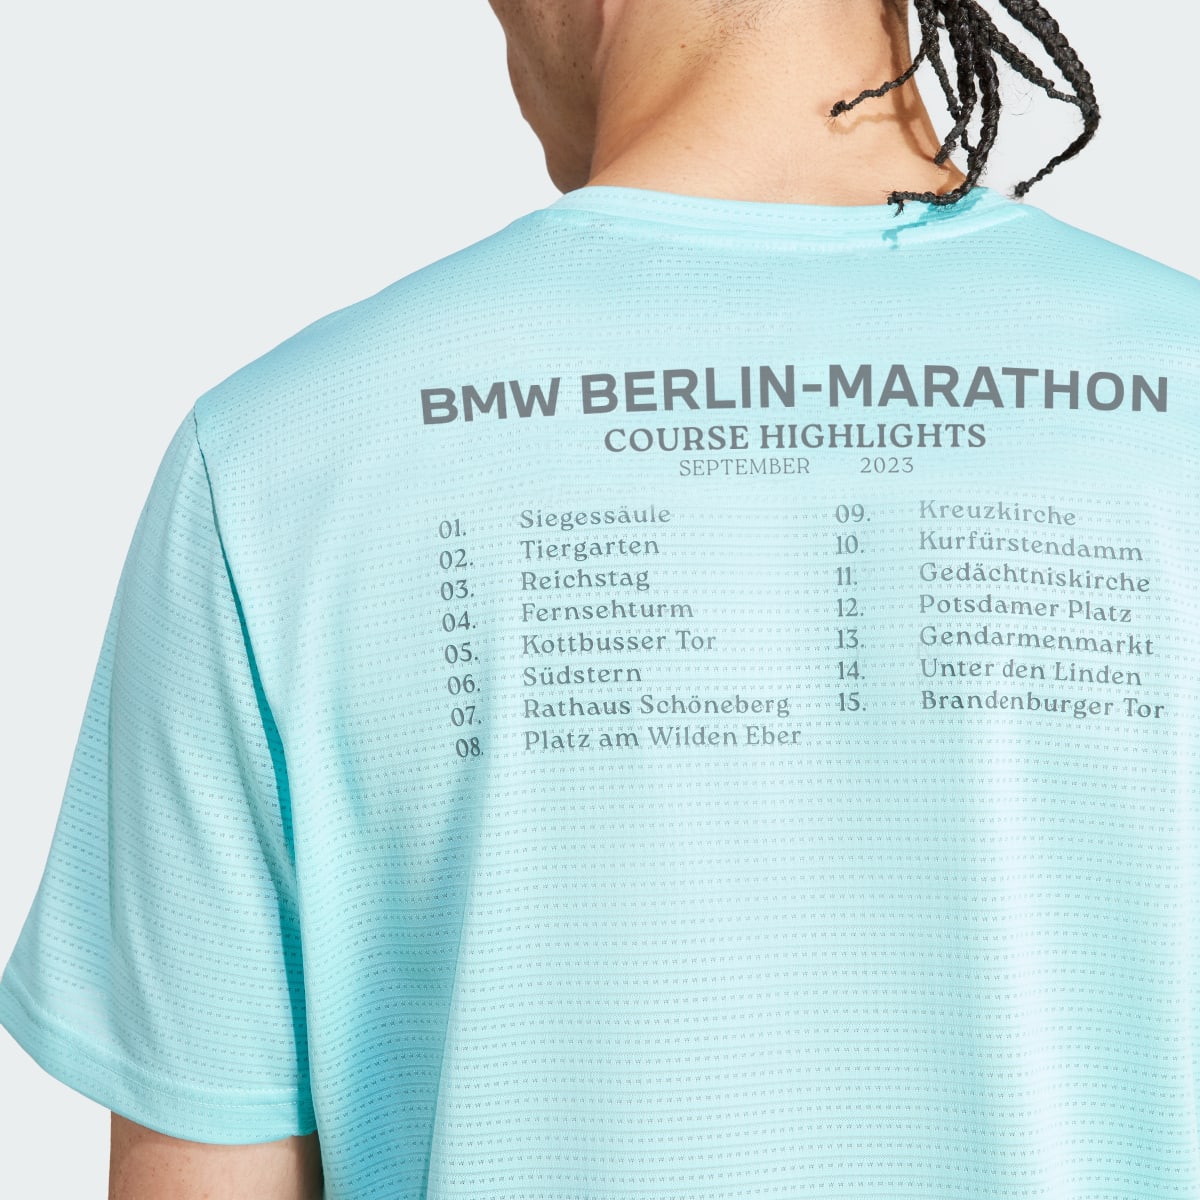 Adidas T-shirt BMW BERLIN-MARATHON 2023 Finisher Event. 7